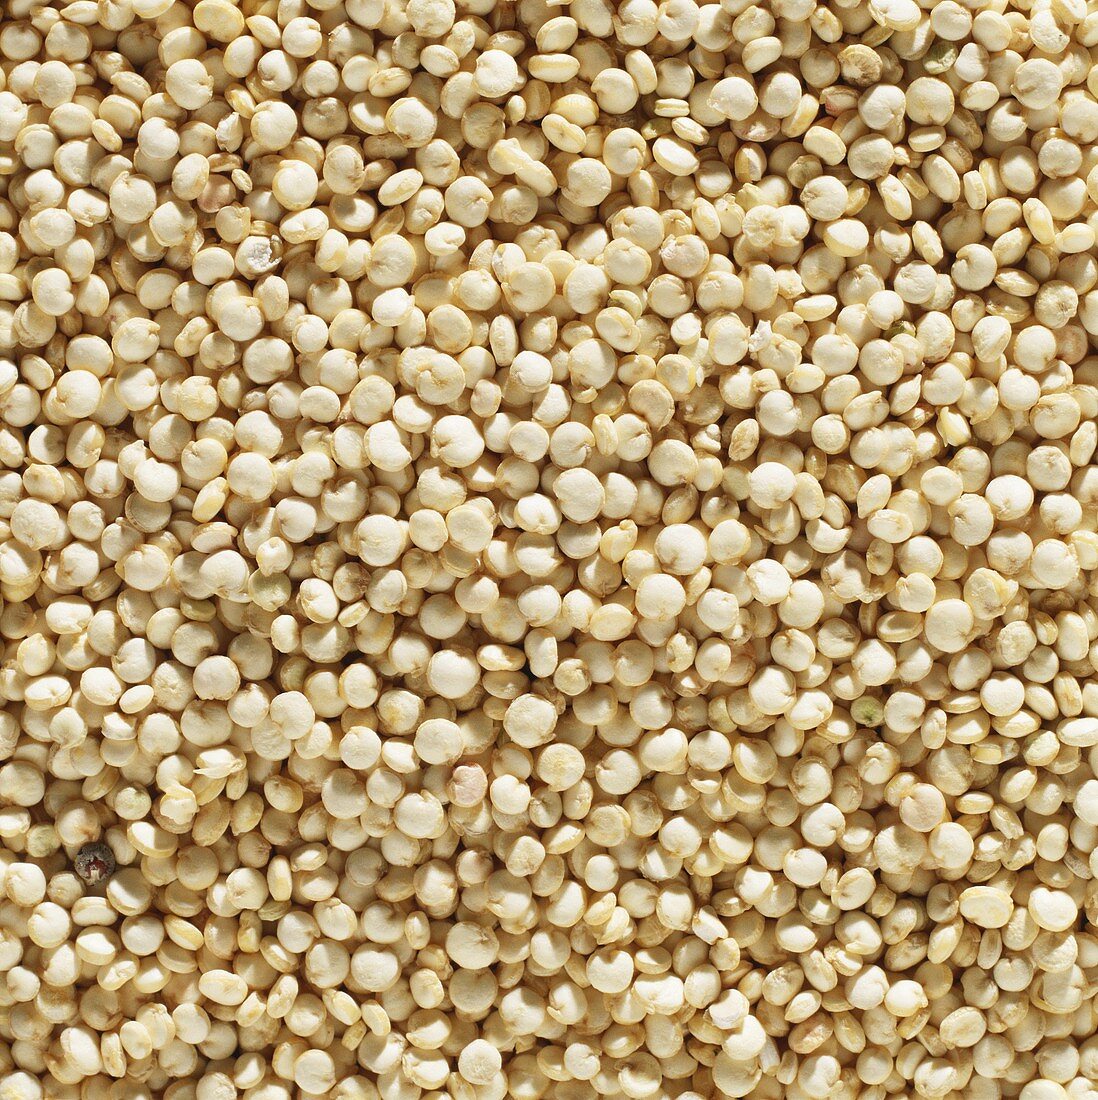 Quinoa (bildfüllend)